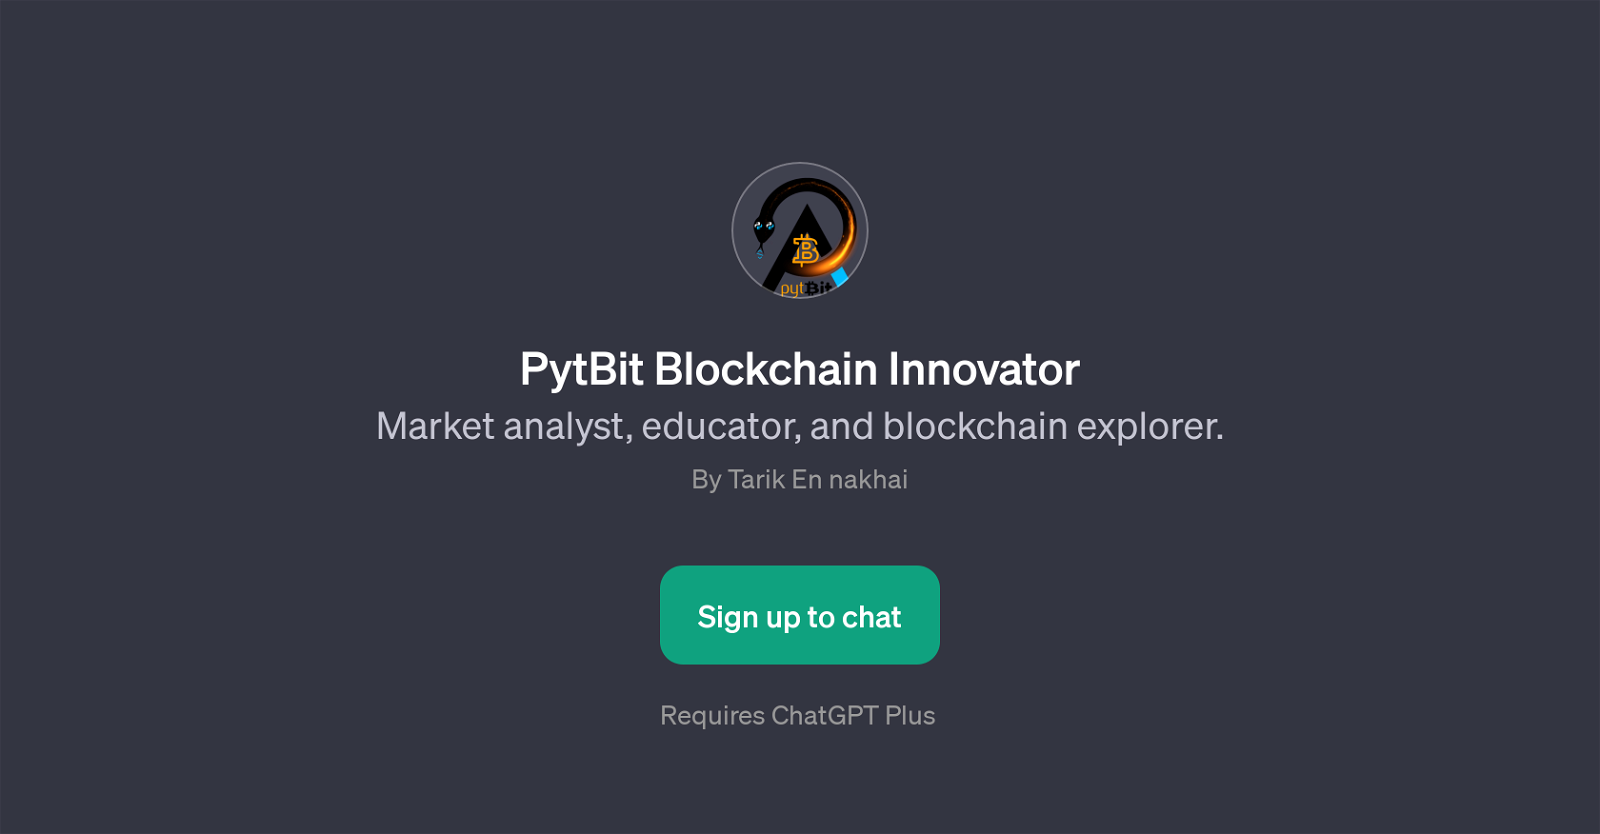 PytBit Blockchain Innovator website